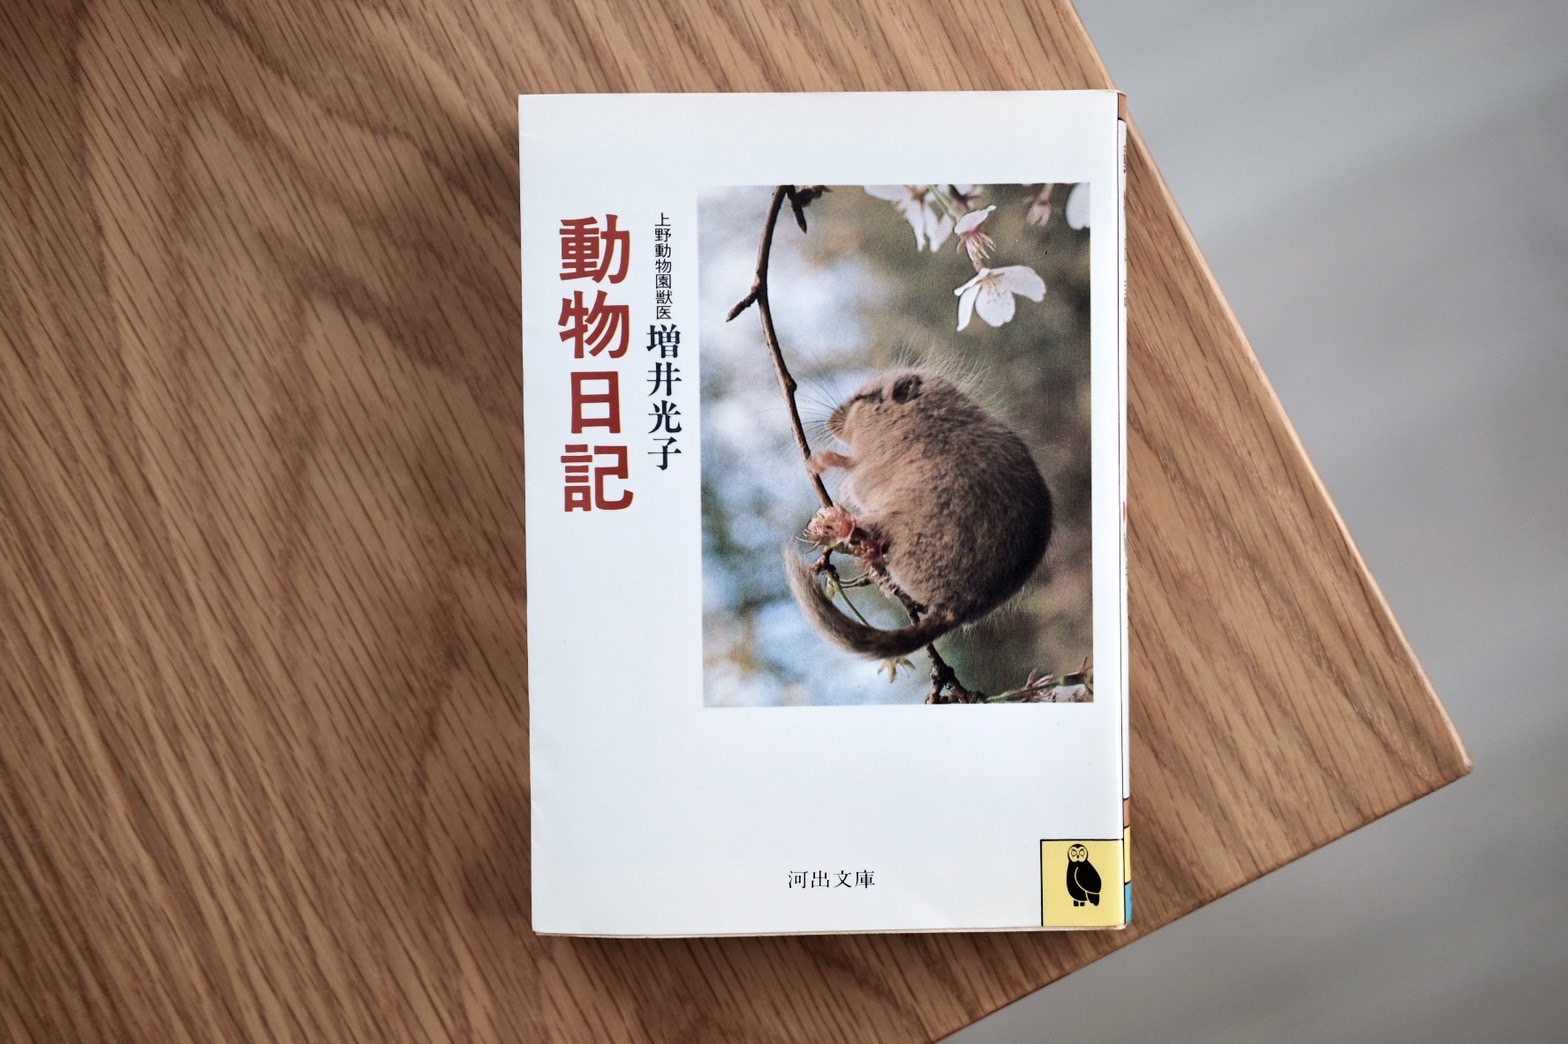 【連載】本と生活と。Vol.38 増井光子『動物日記』